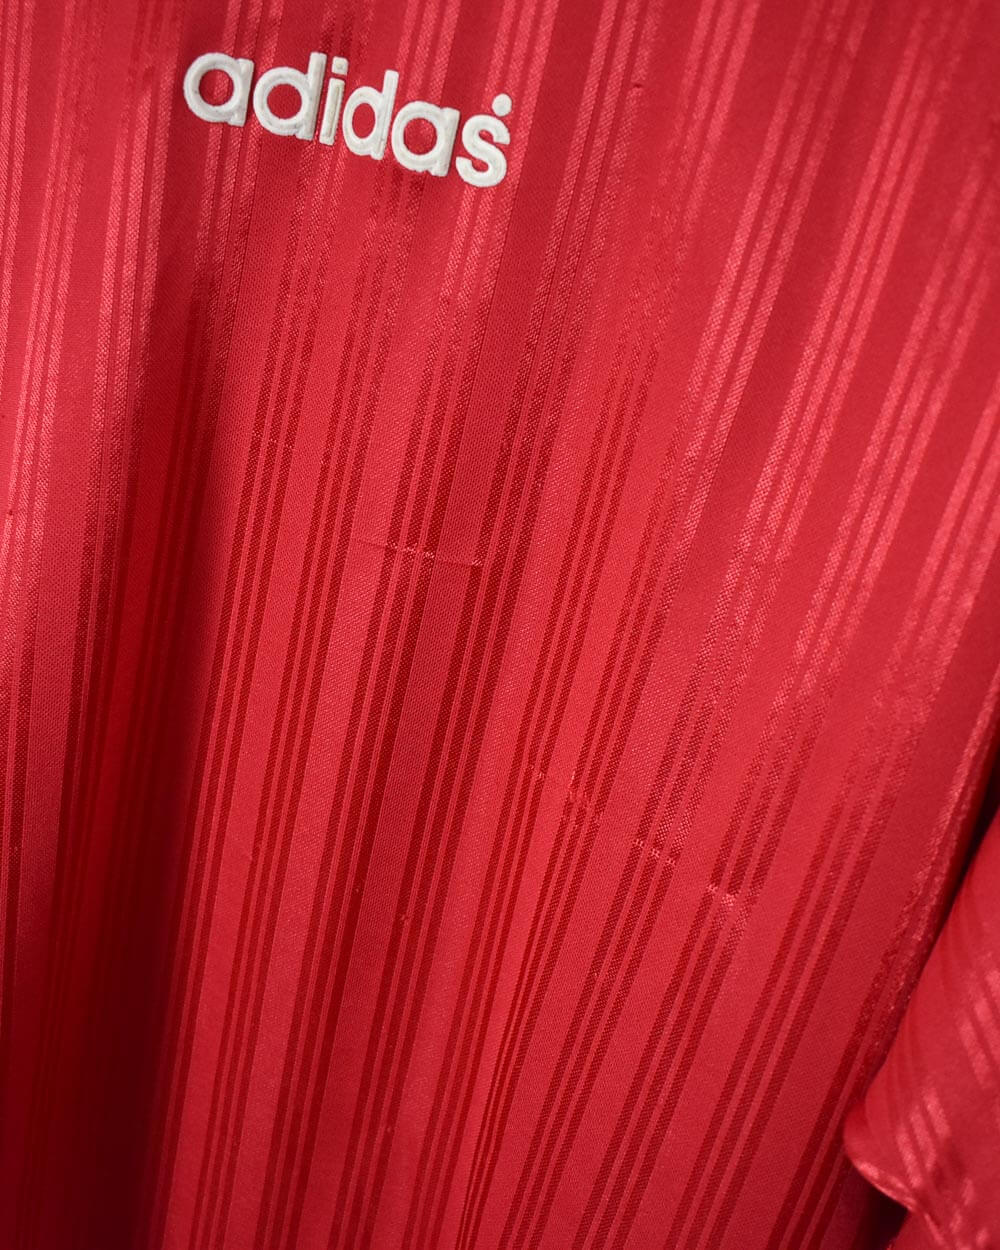 Red Adidas Yoshi 18 T-Shirt - XX-Large